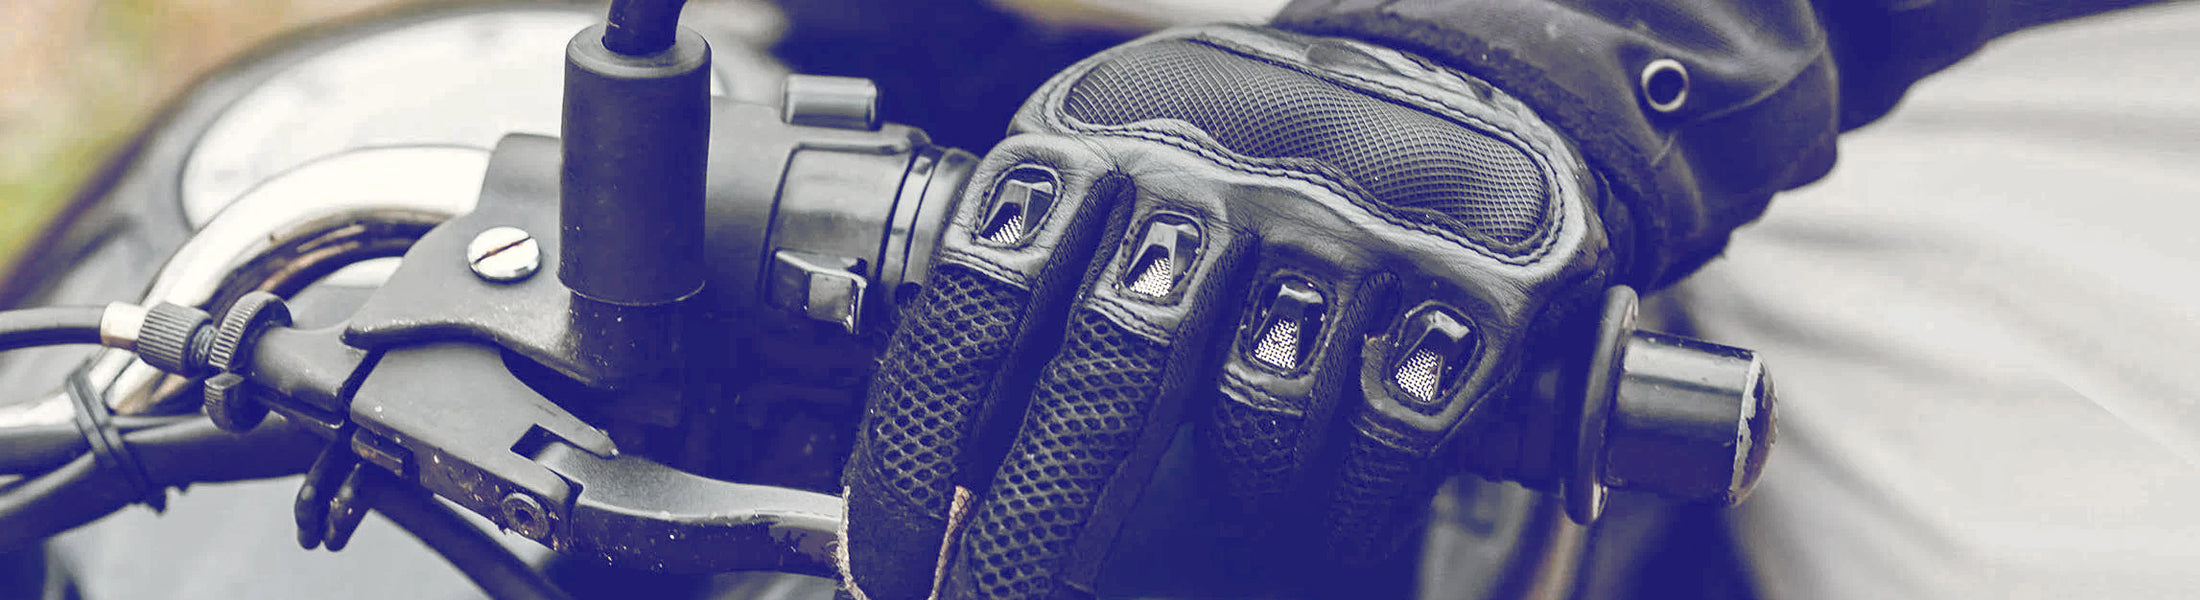 myleather motorcycle glove